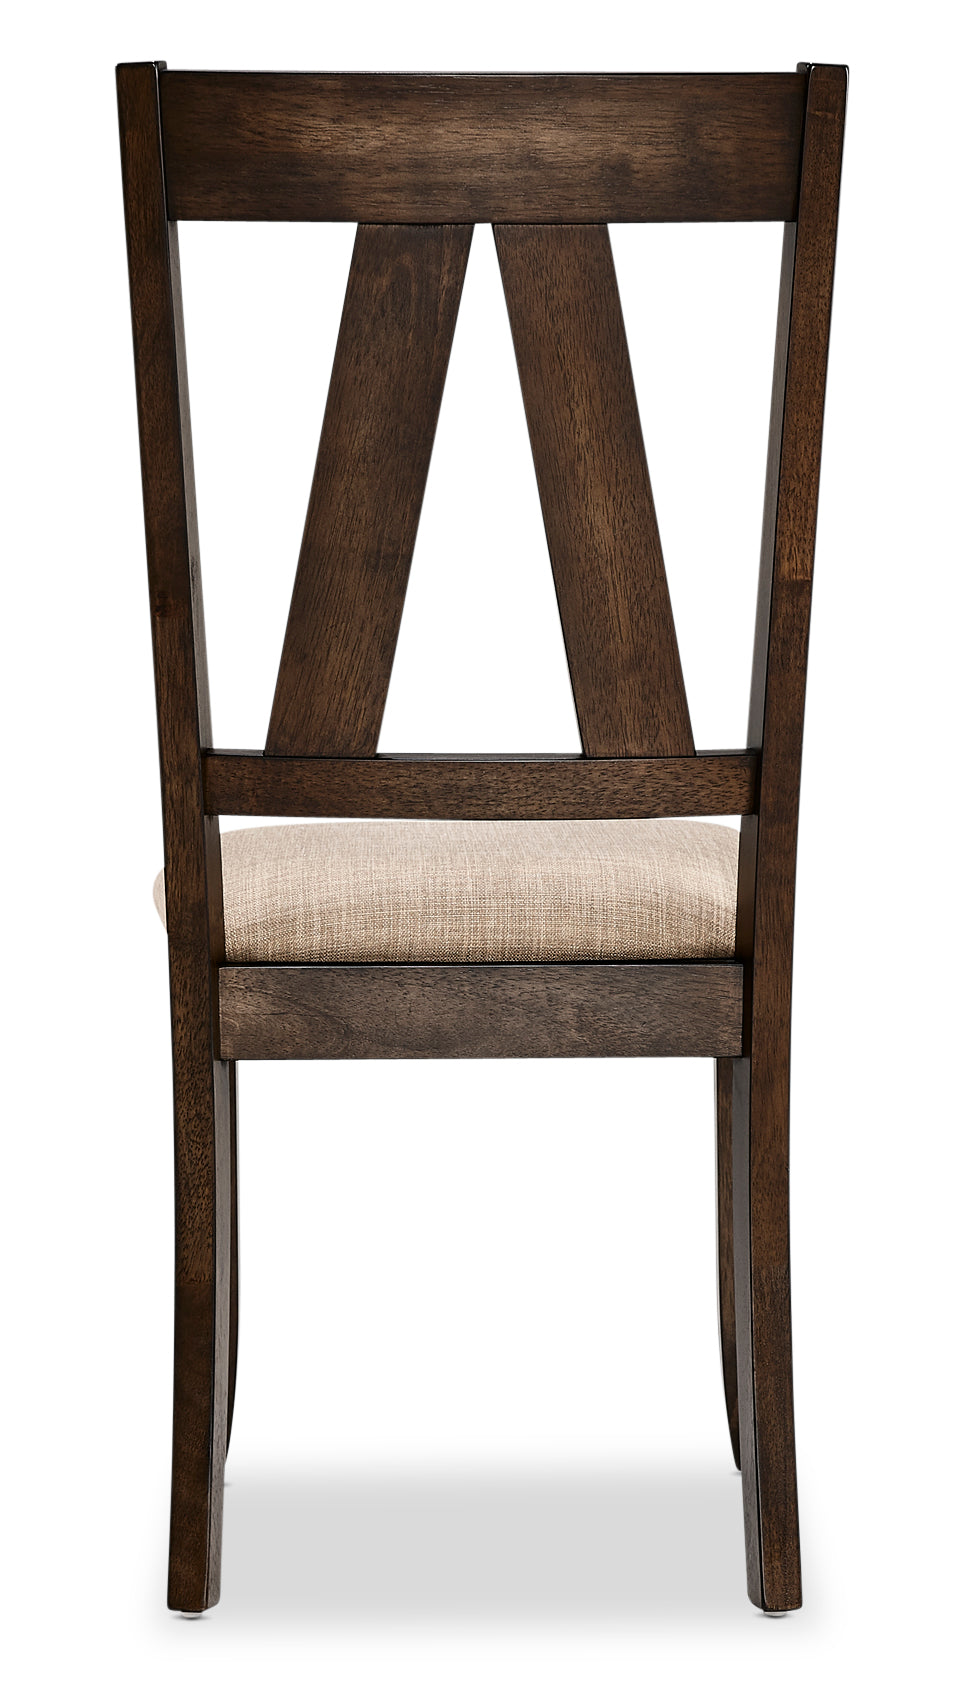 Thompson Side Chair - Dark Oak